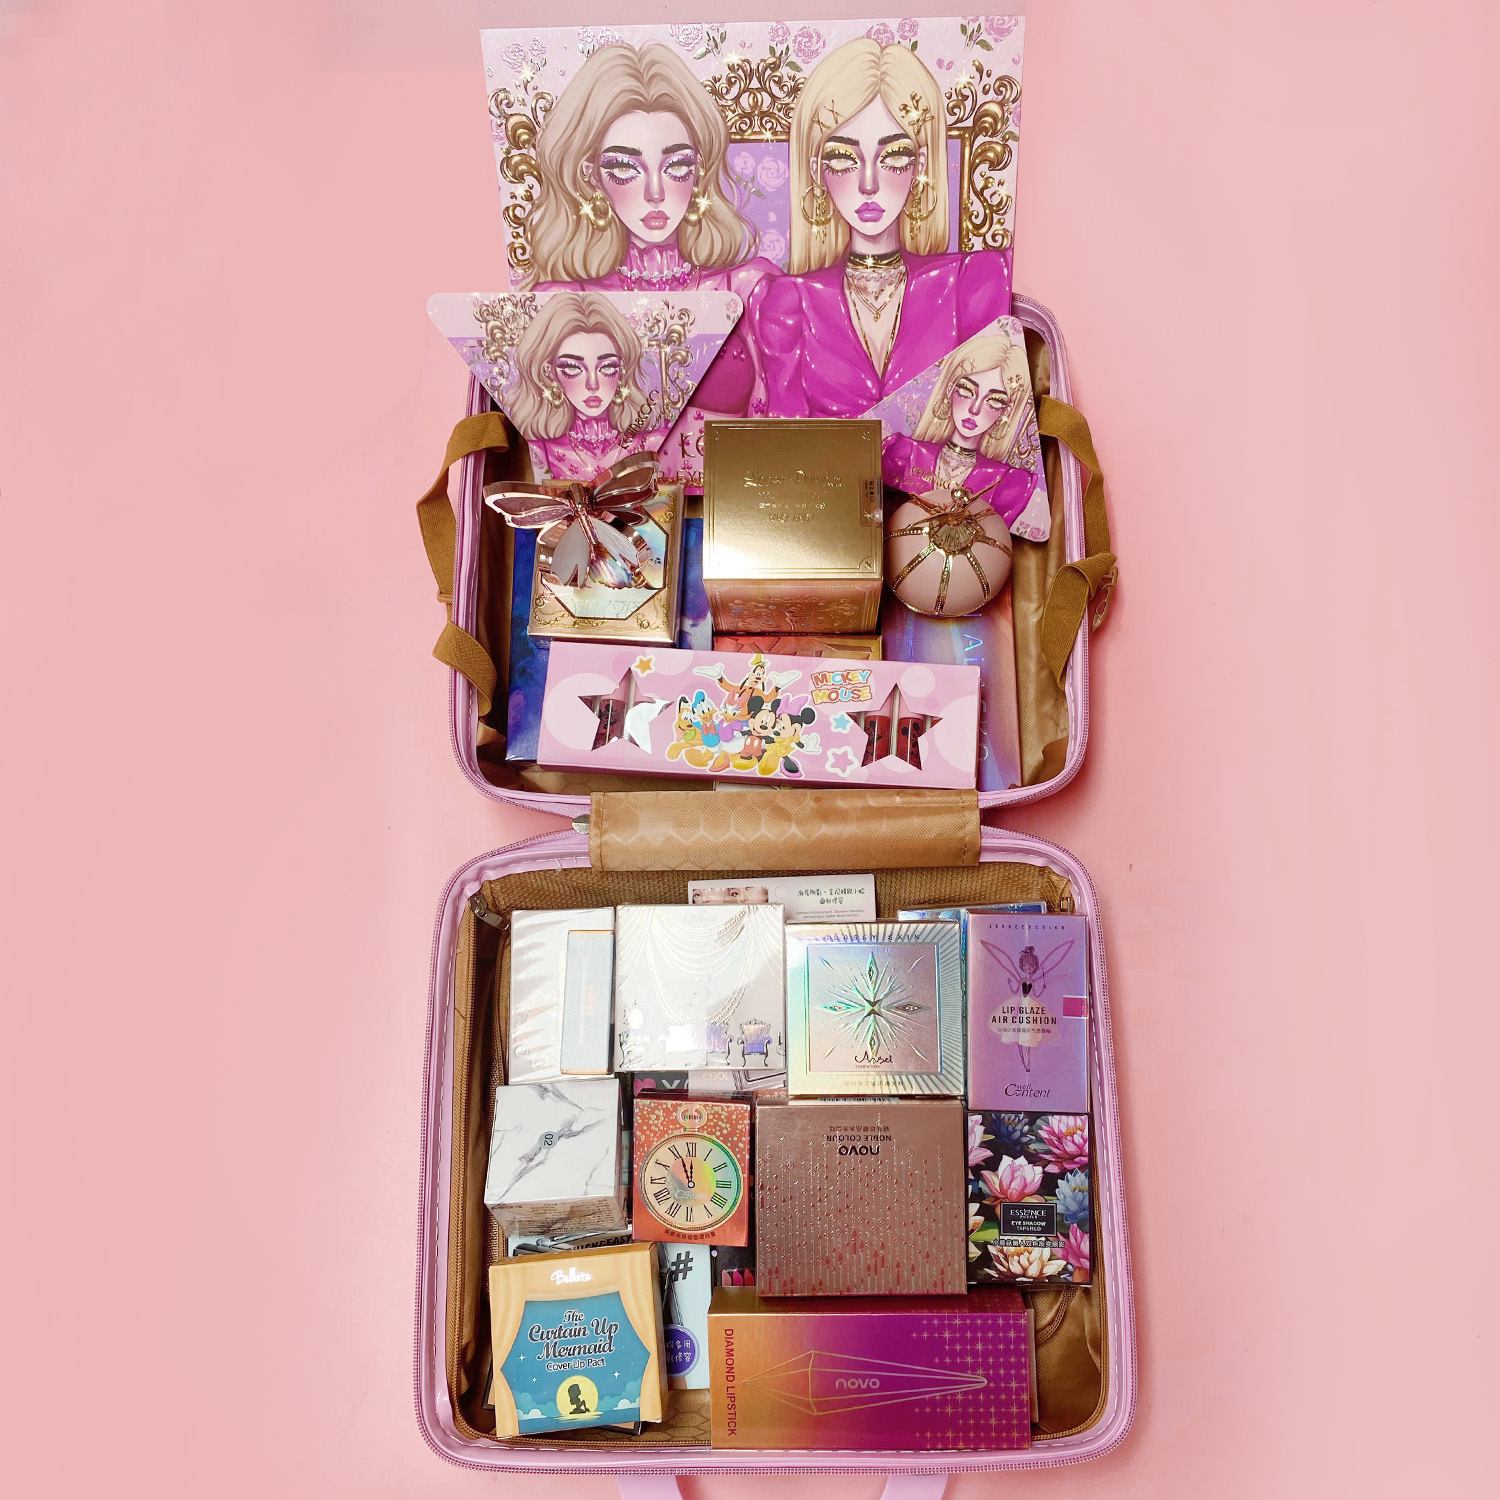 LIVE2【princess diamond set 11】-- kevin coco set, ballerina loose powder, butterfly eyeshadow palette, diamond highlighter, 25pcs products set